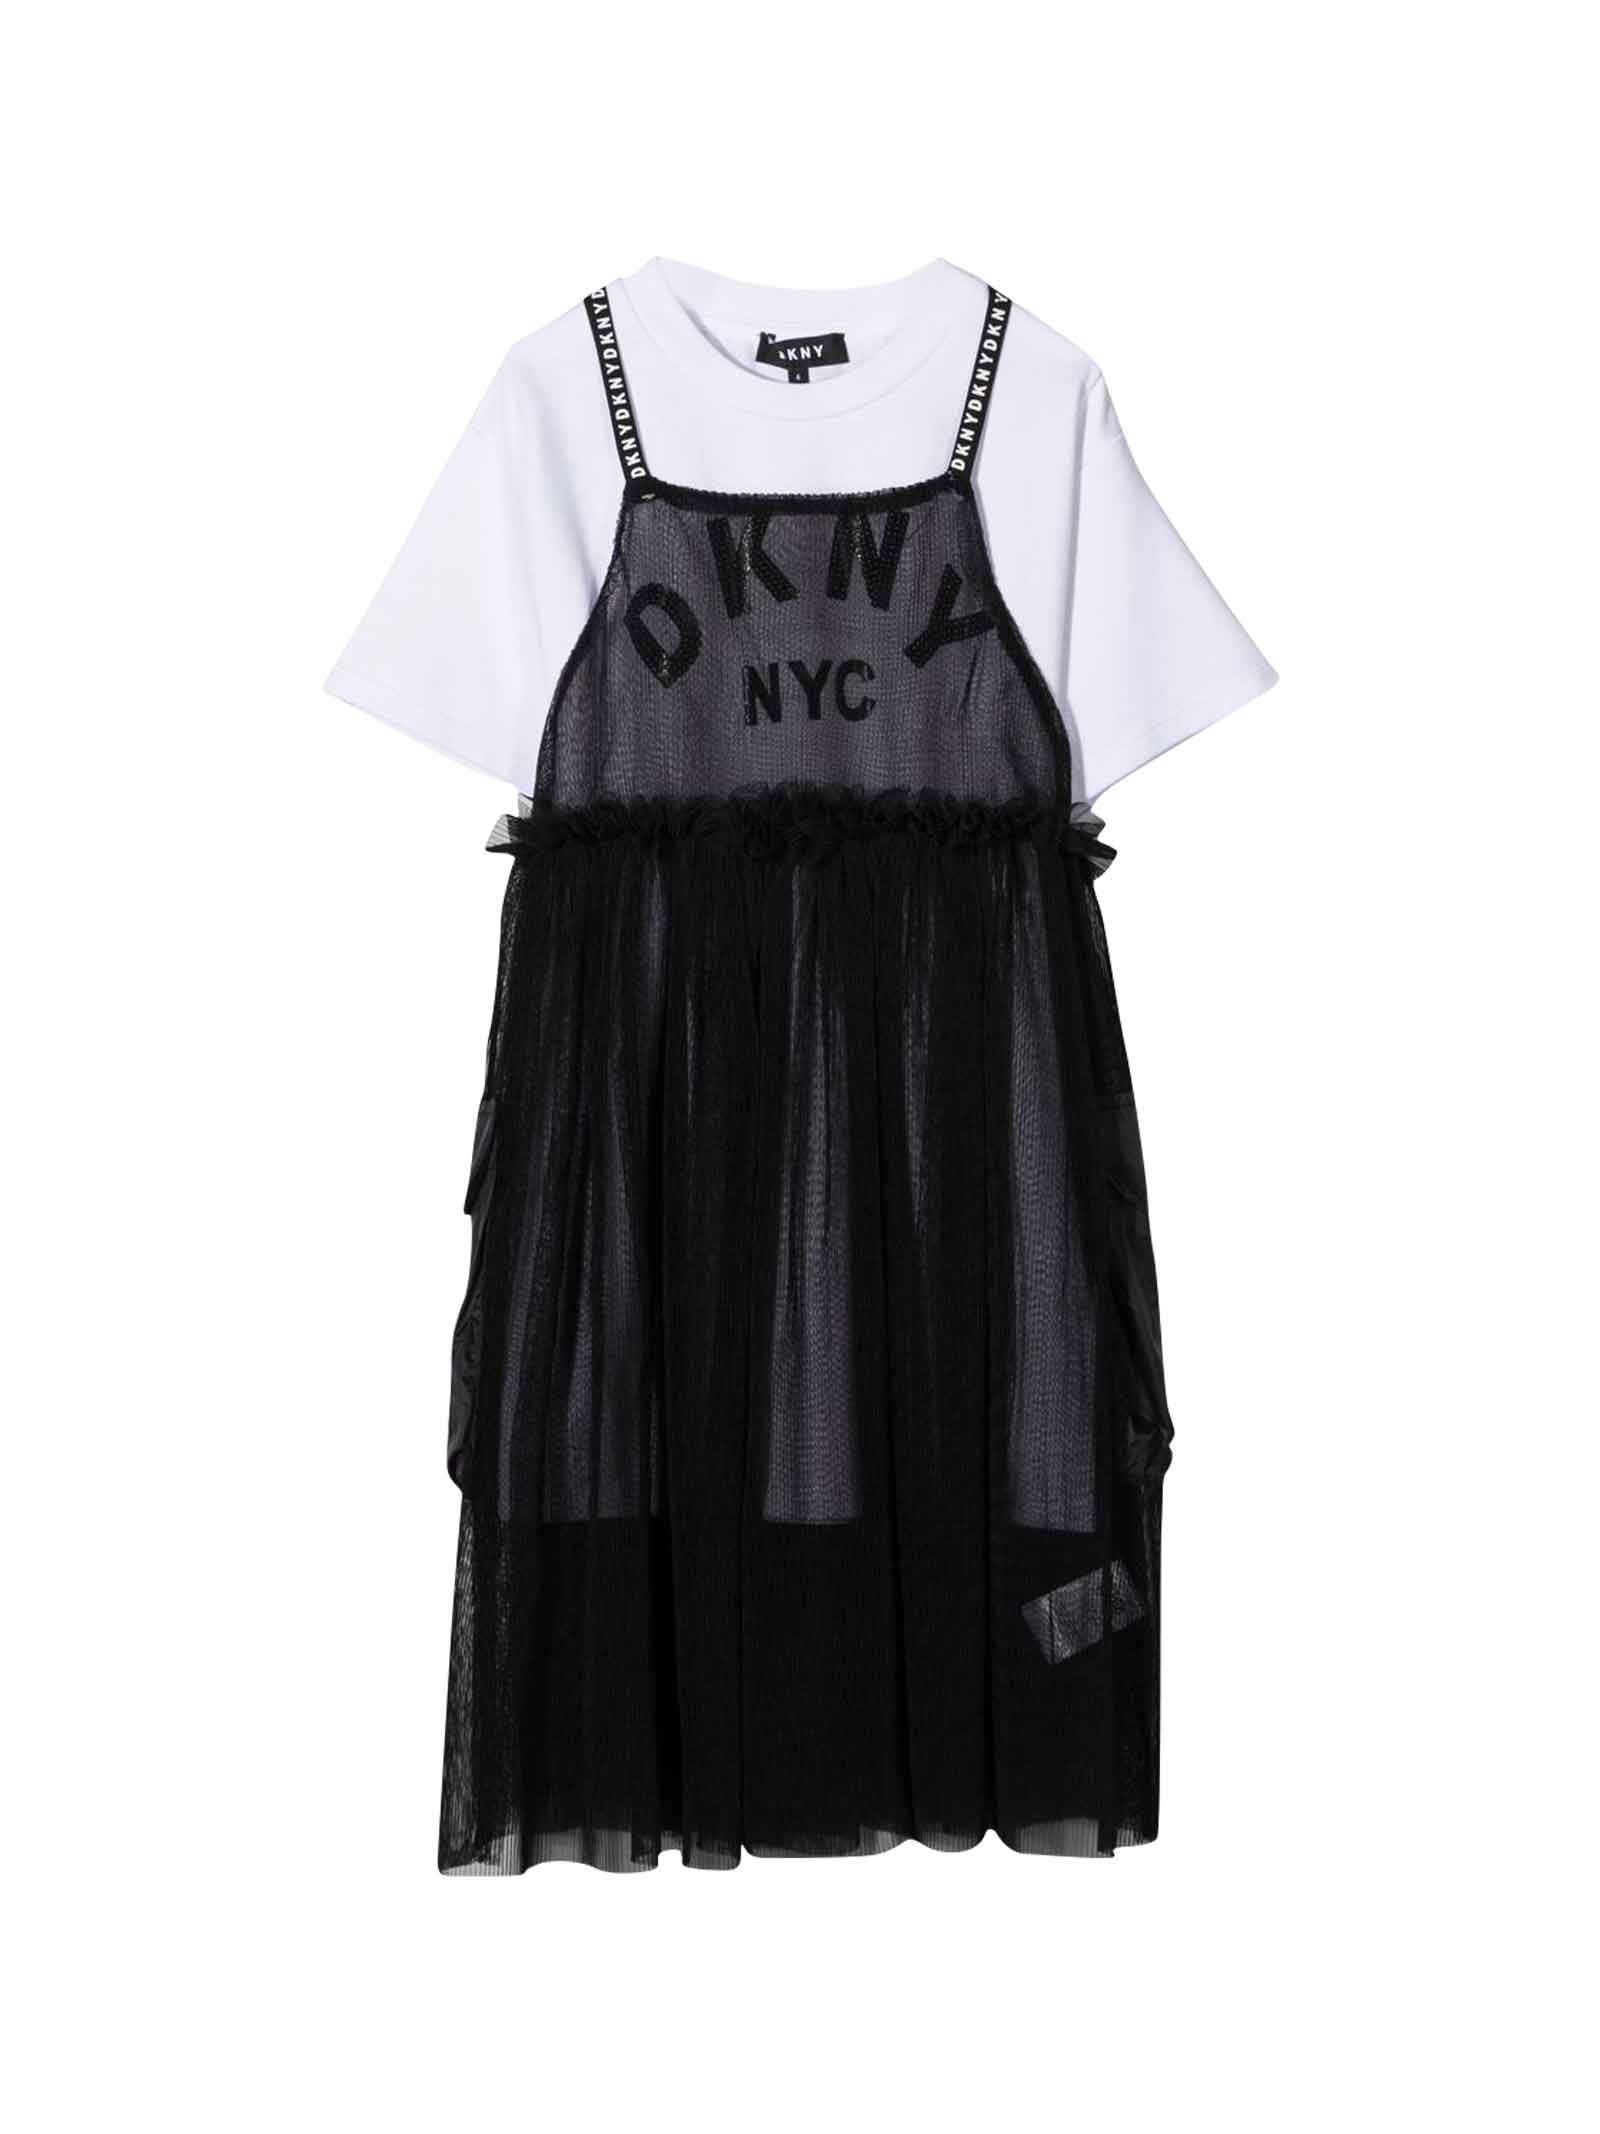 DKNY Black And White Teen Dress